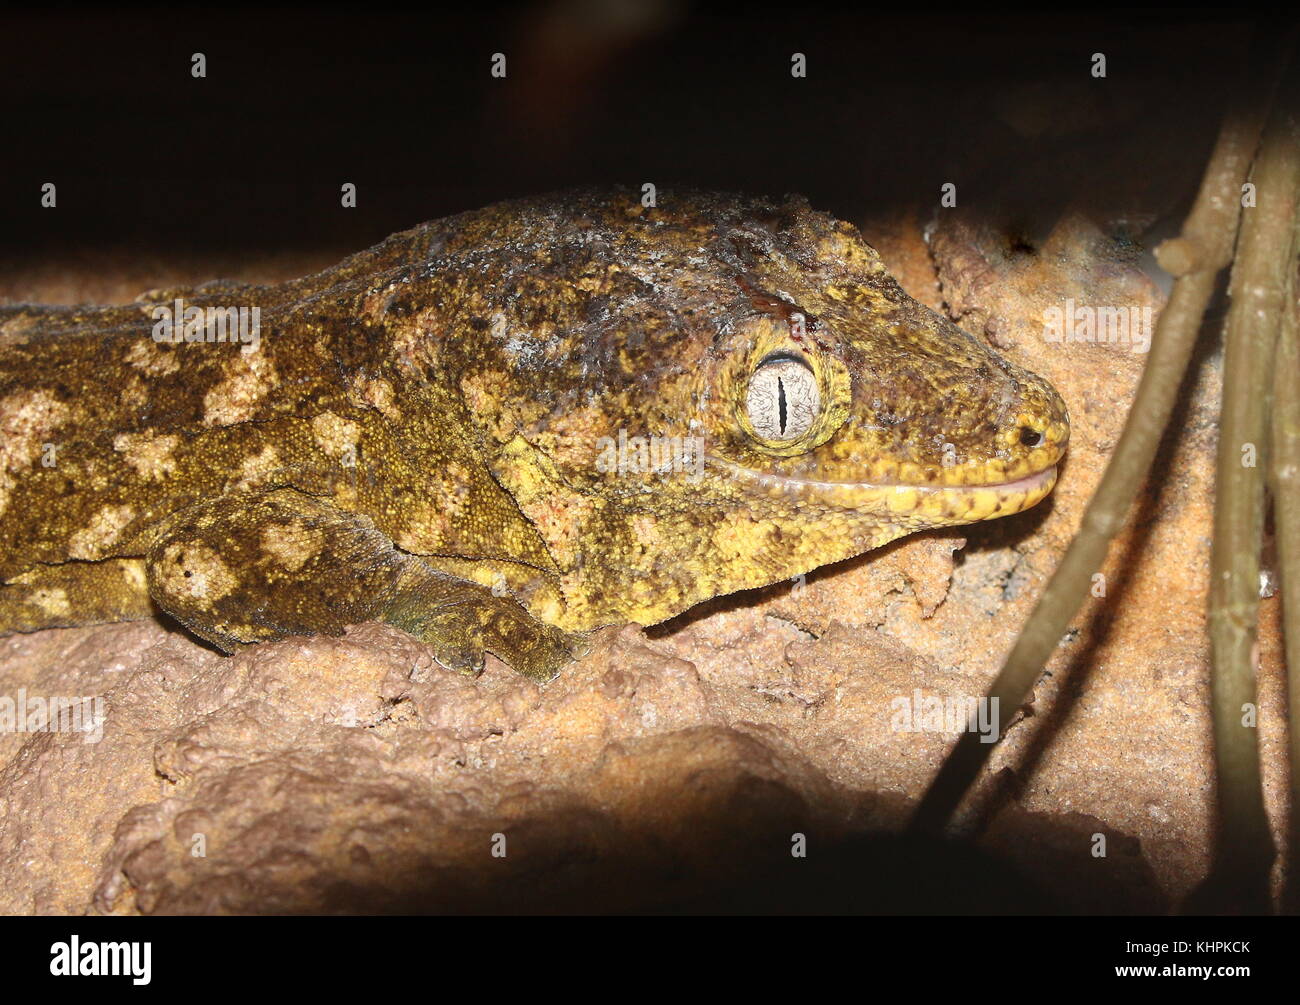 New Caledonian or Leach's giant gecko (Rhacodactylus leachianus) Stock Photo